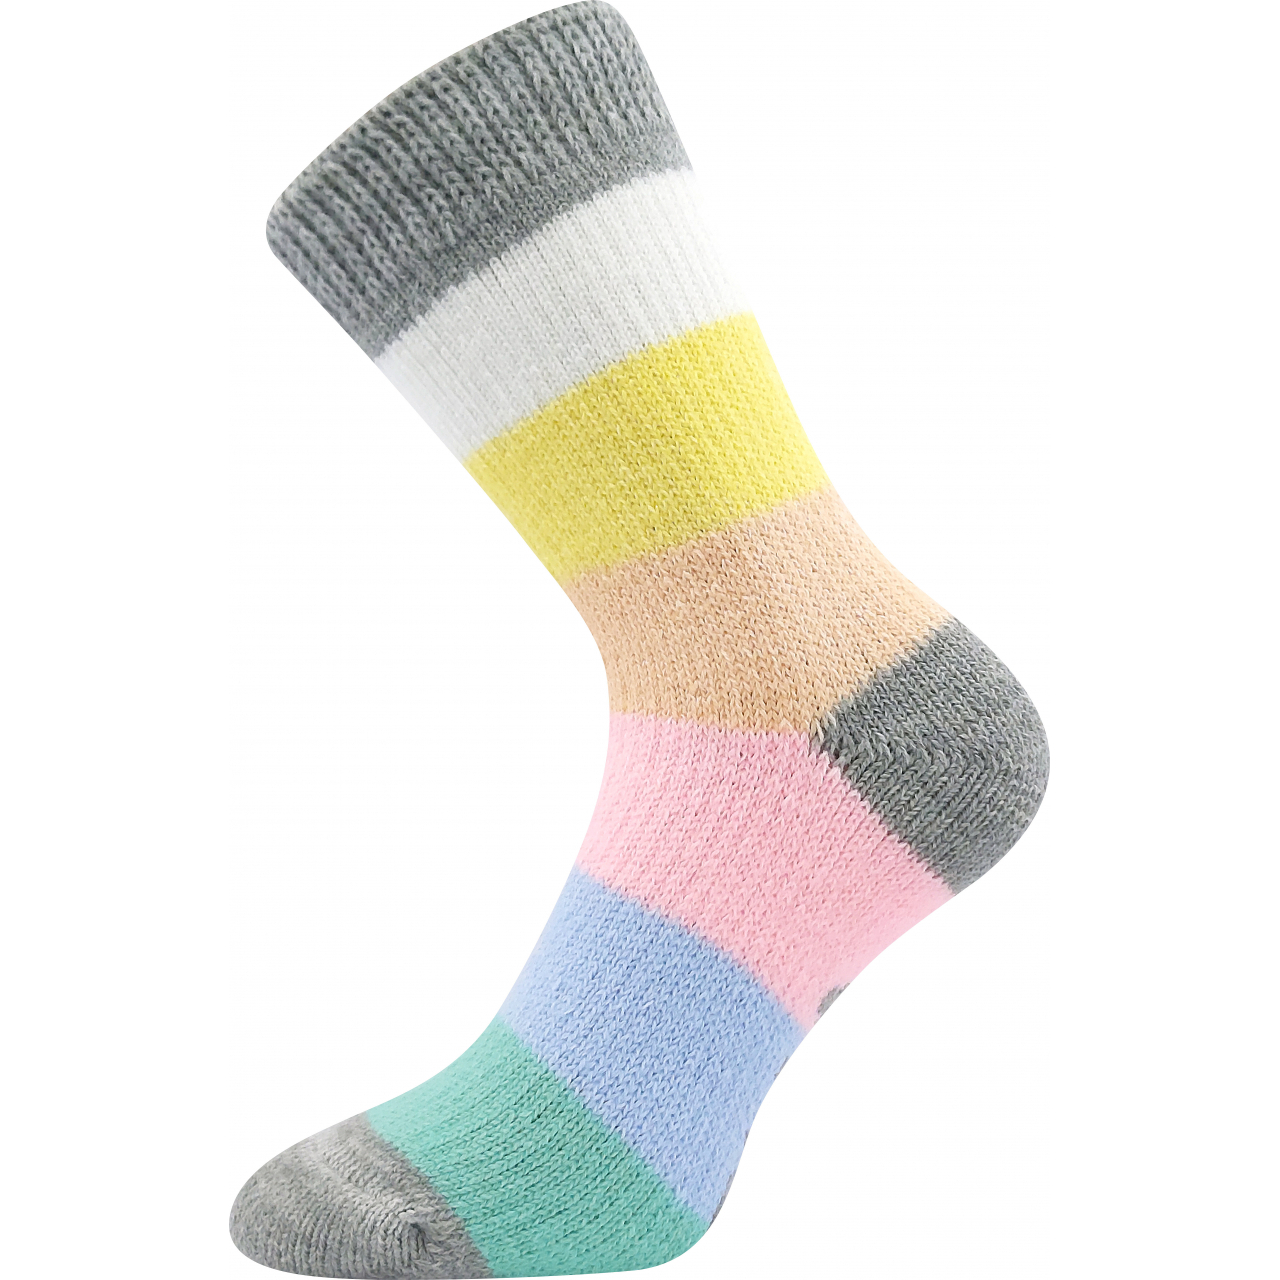 Ponožky spací unisex Boma Spací Pruh - barevné, 39-42